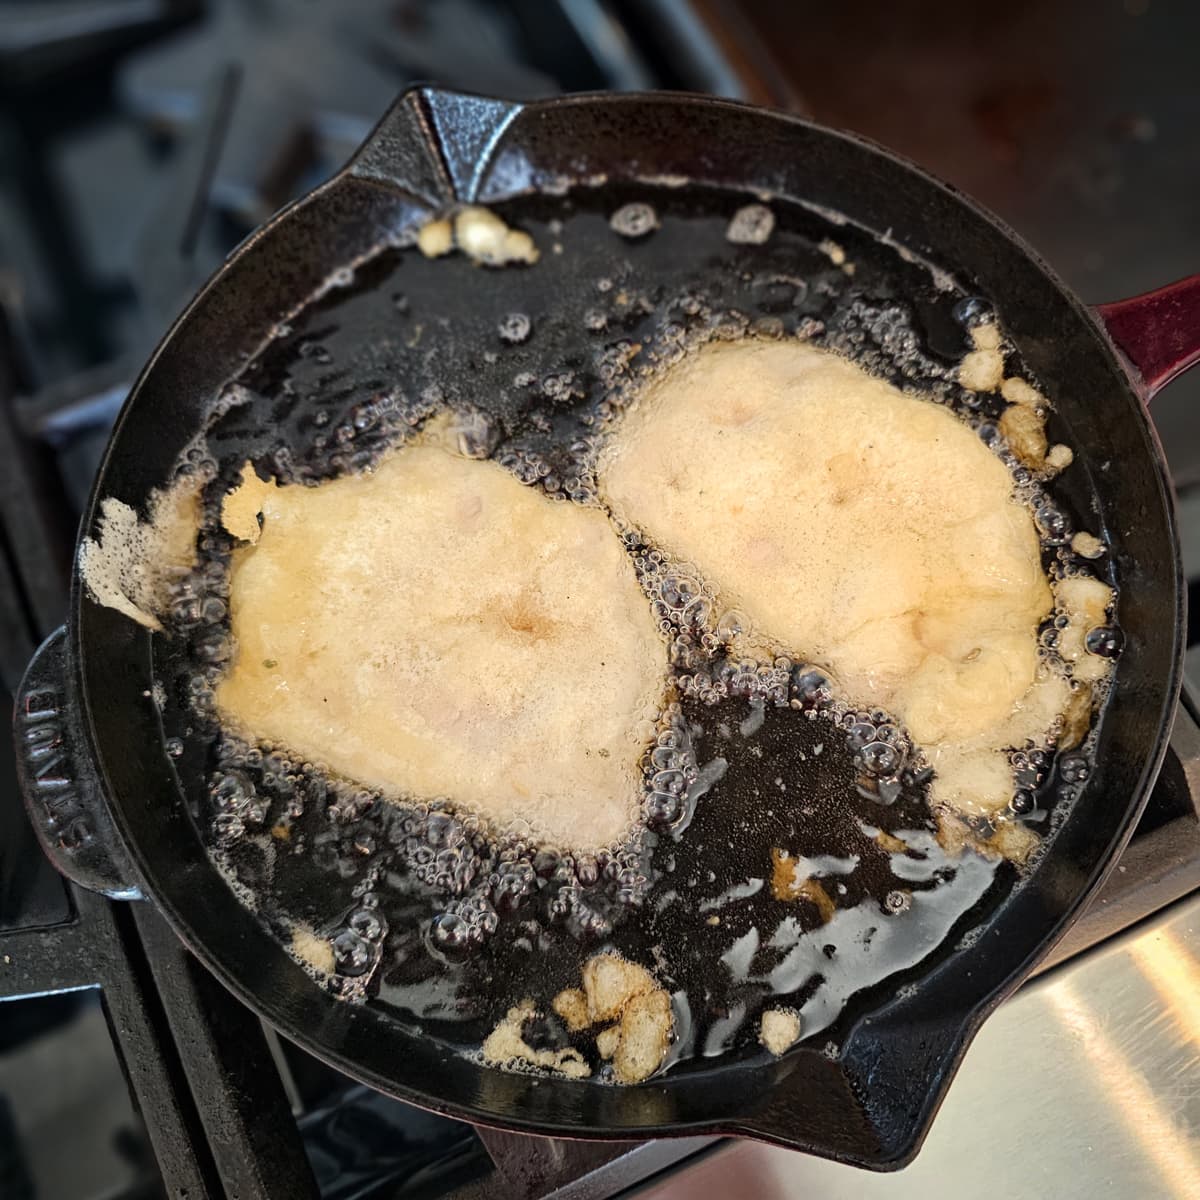 Tempura pork tenderloins frying in oil in a cast iron pan.